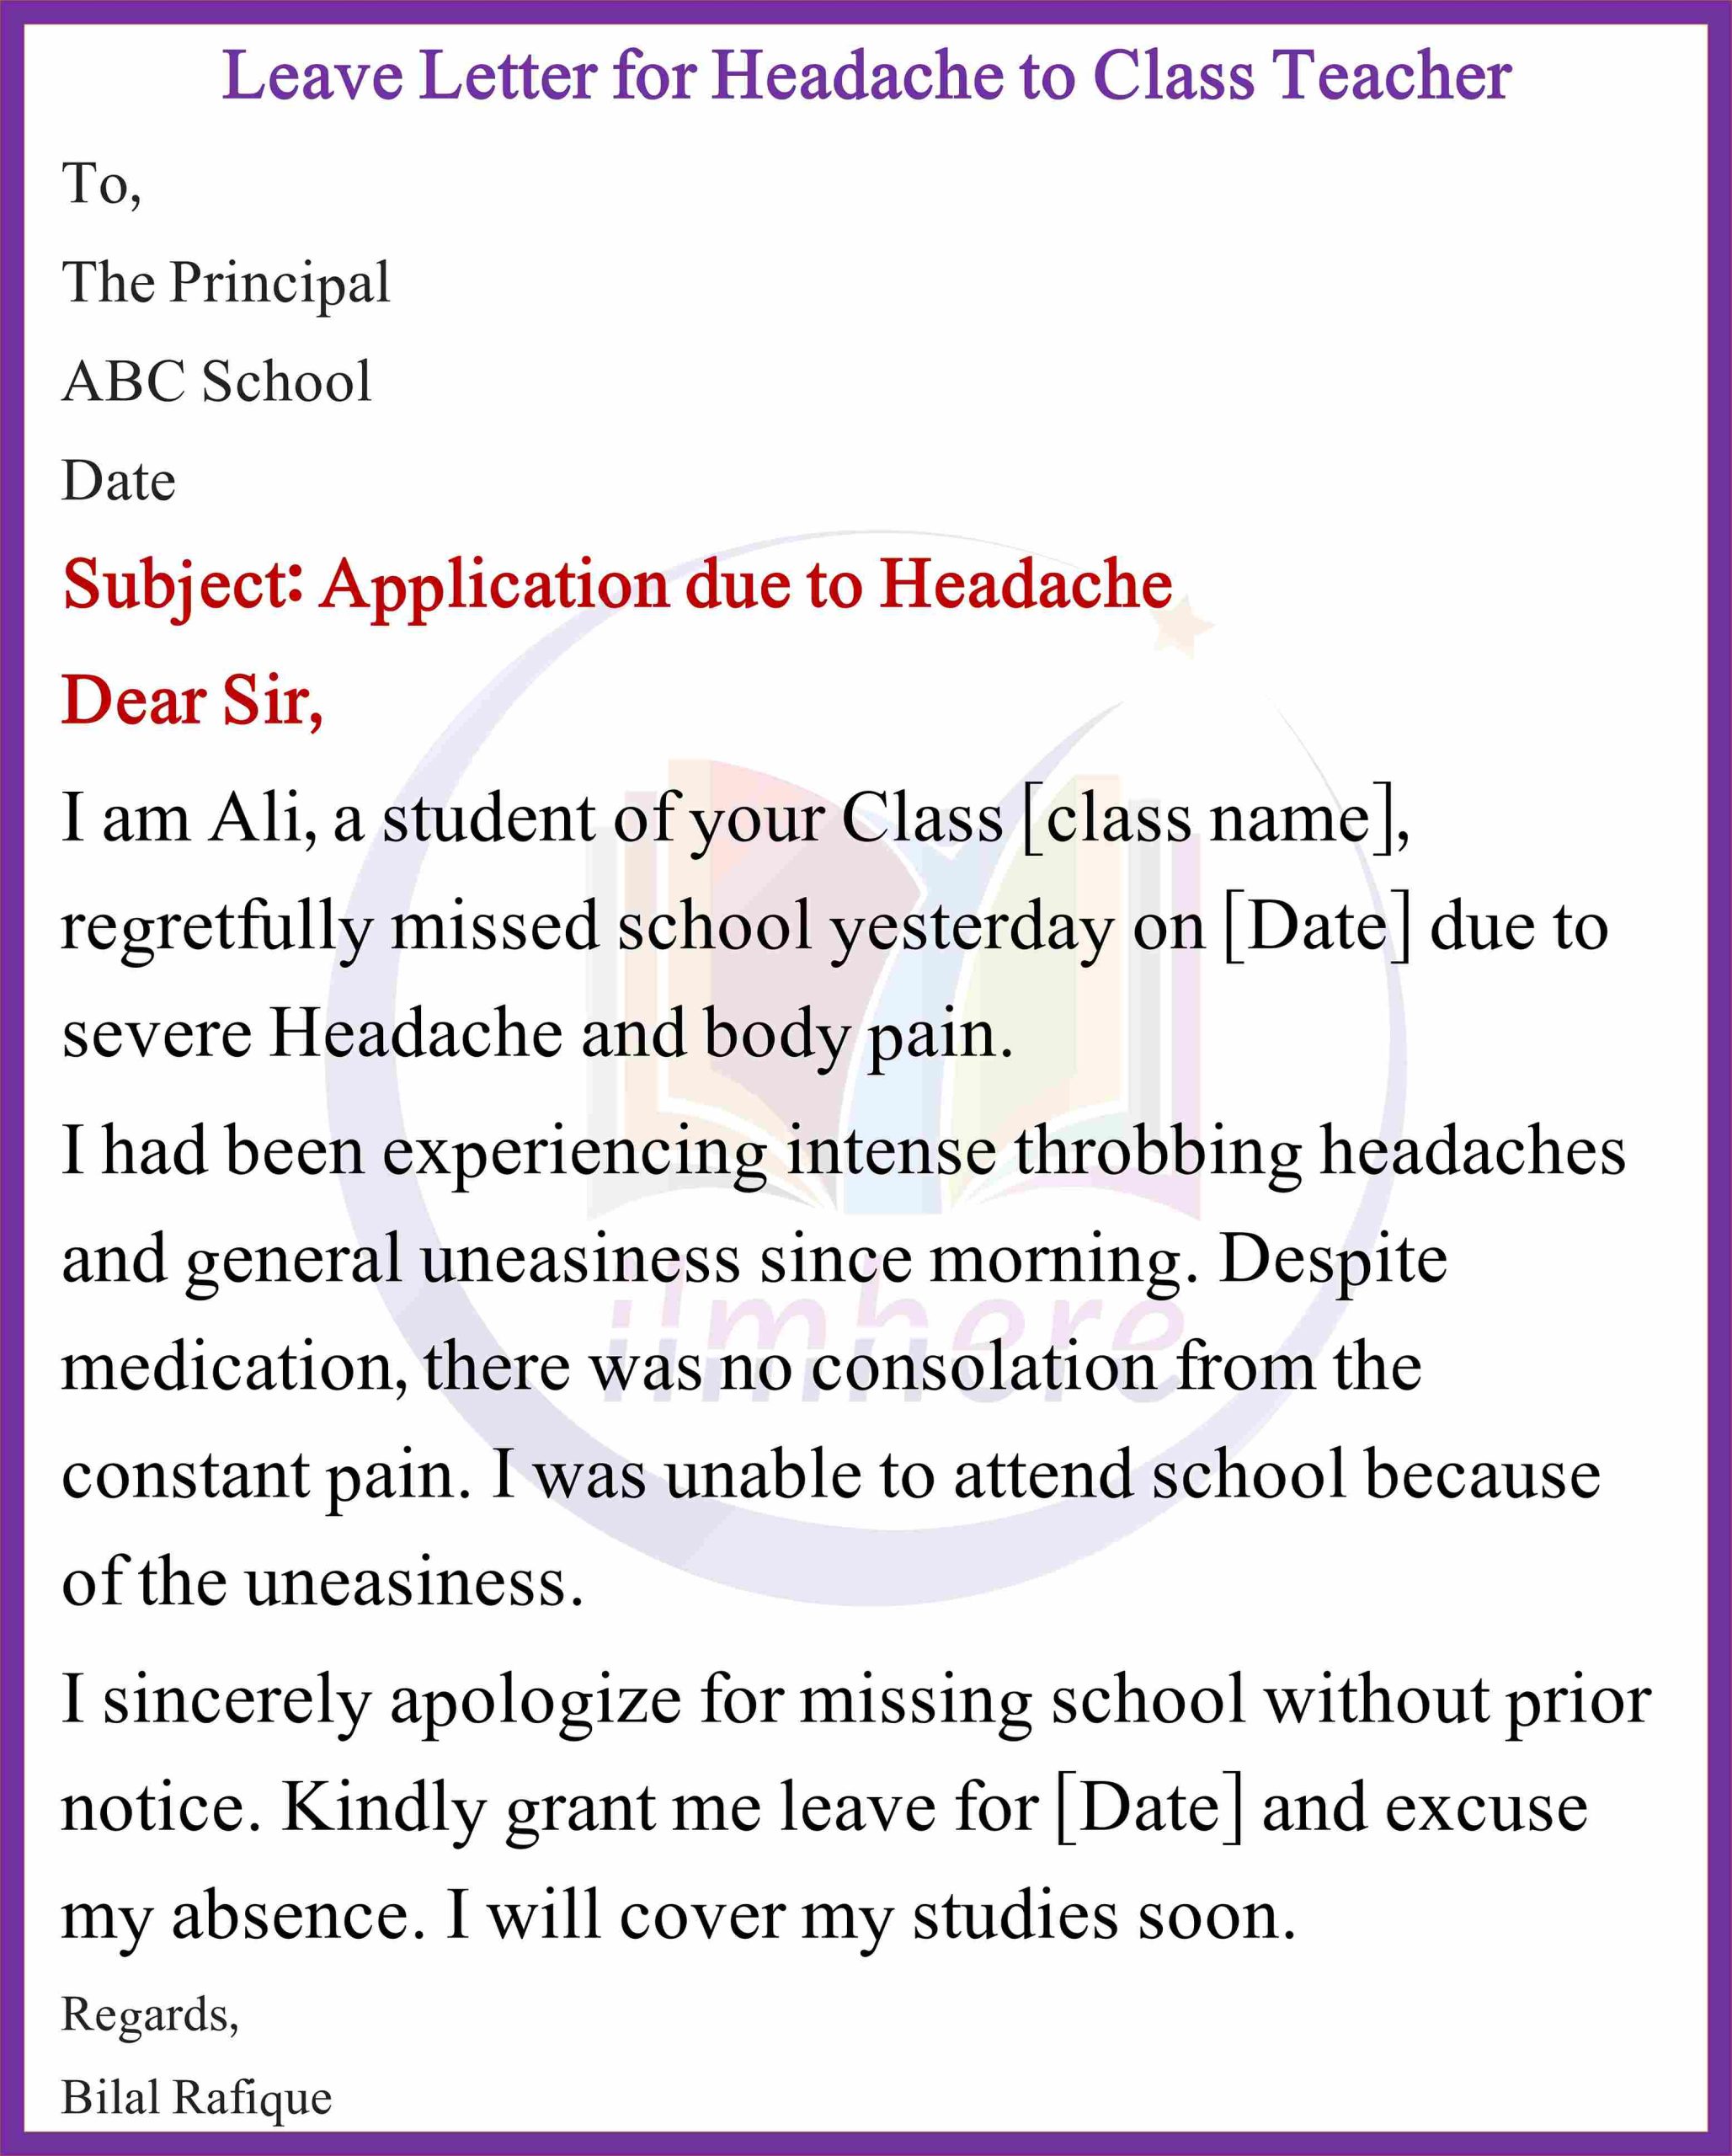 Leave Letter for Headache to Class Teacher